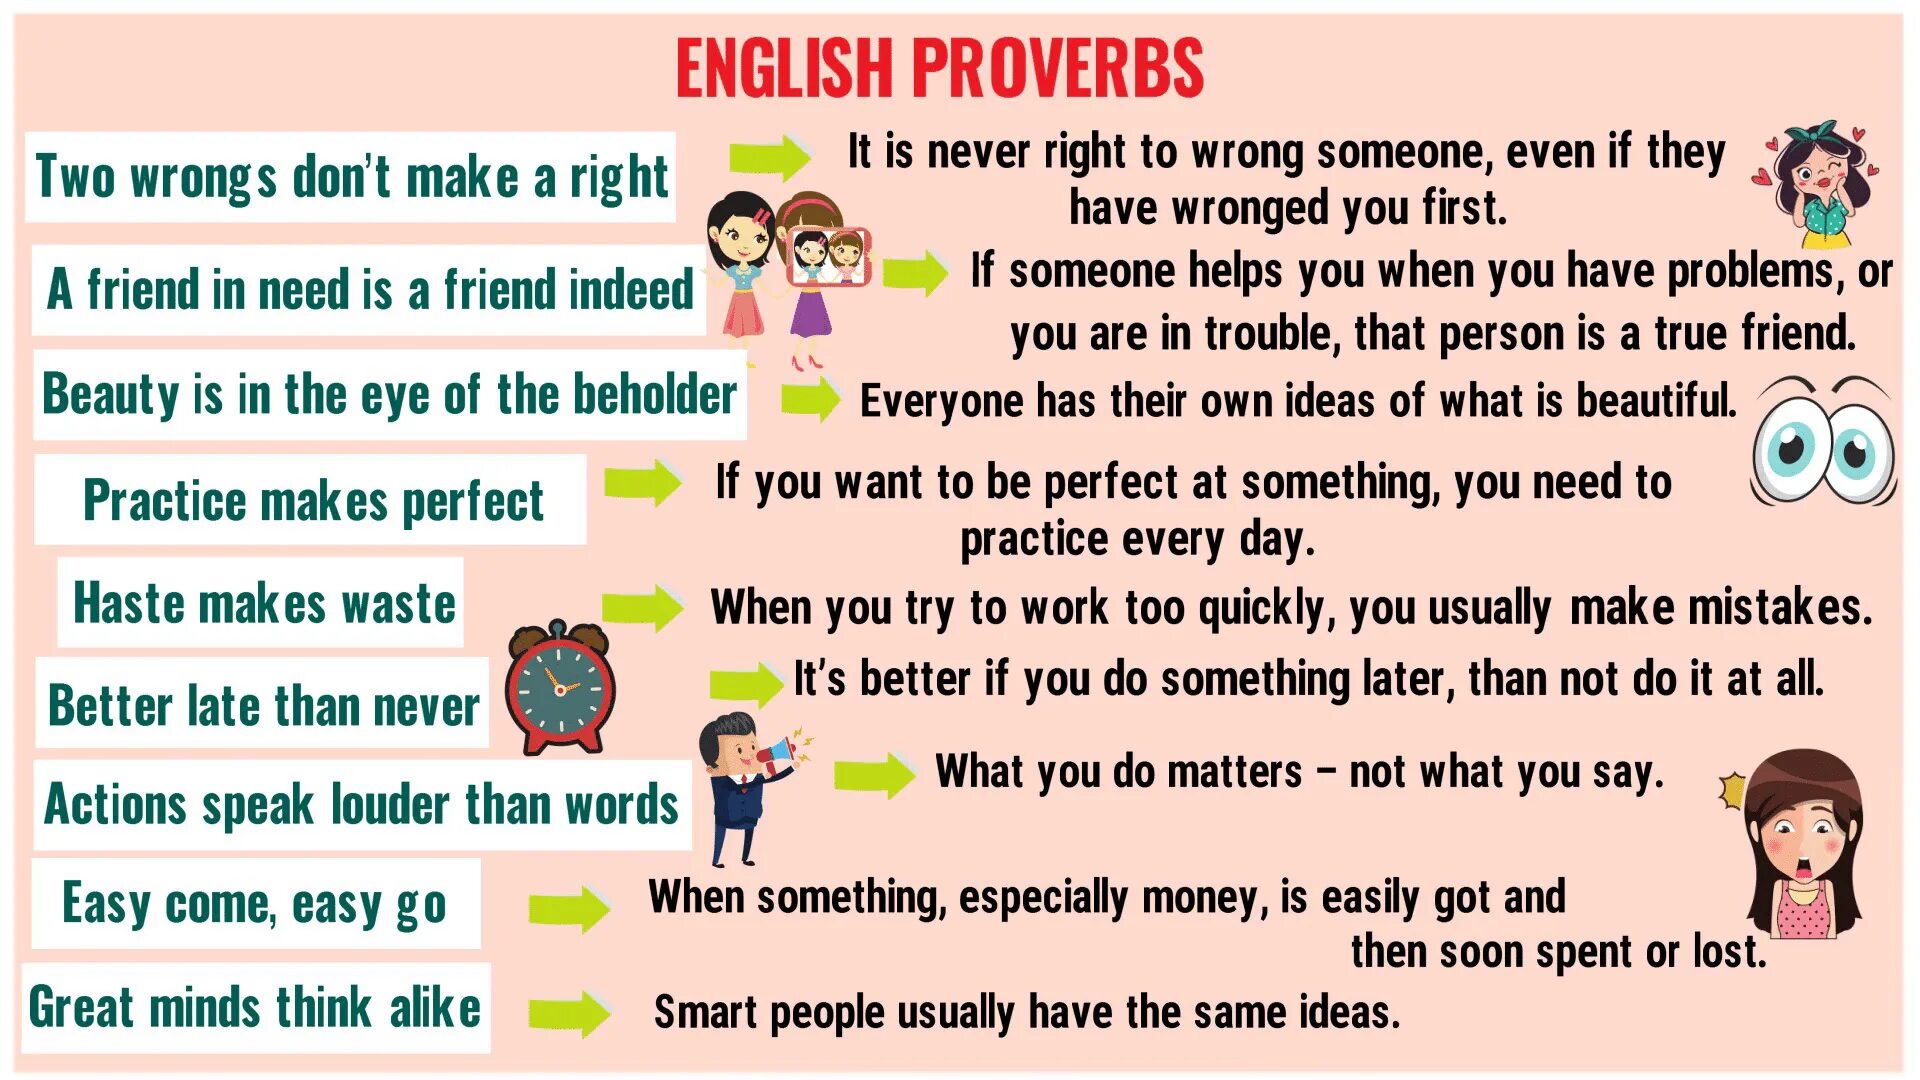 Proverb перевод. English Proverbs. Famous Proverbs. Поговорки на английском. Английские пословицы.